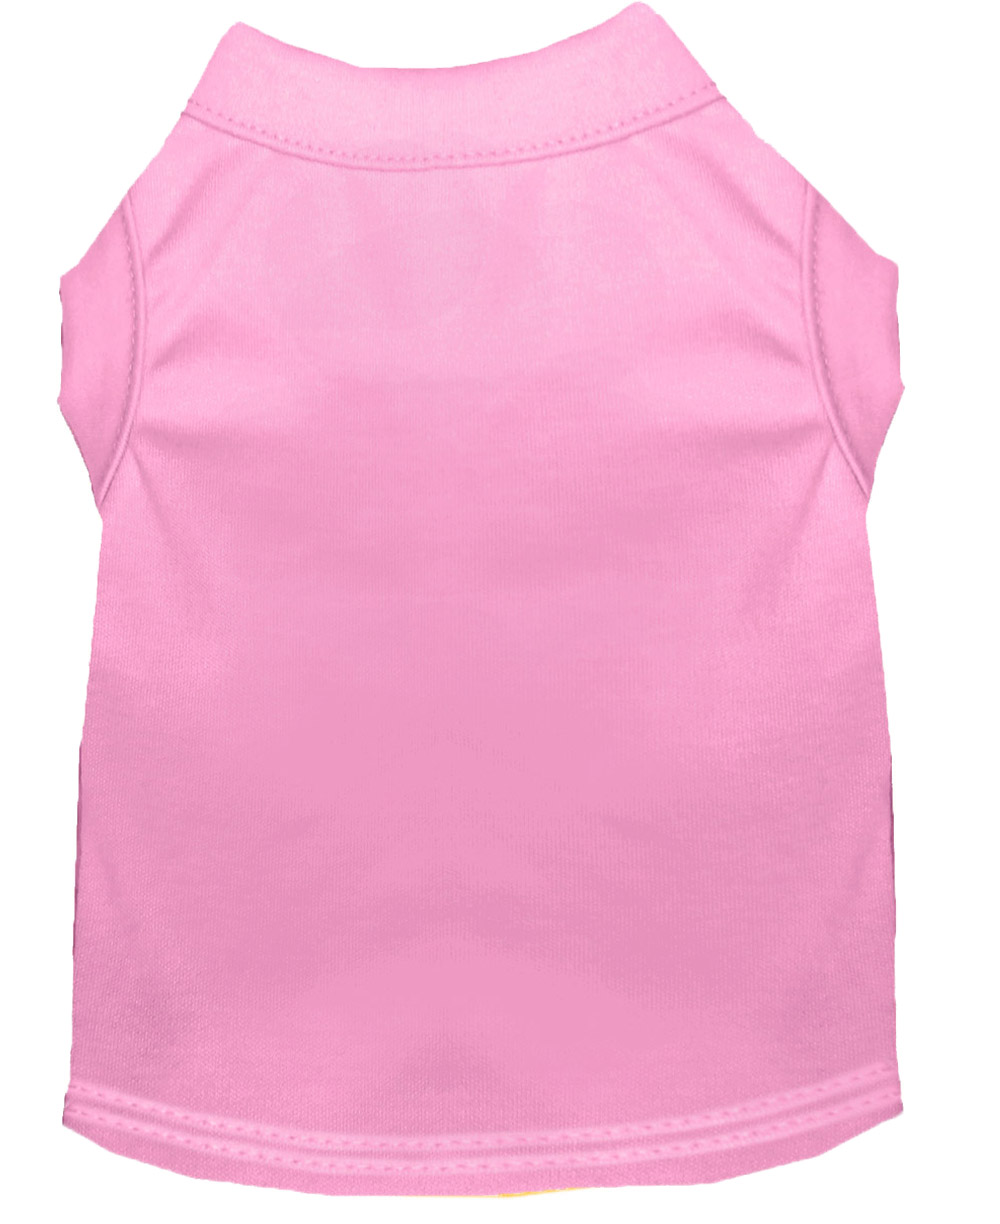 Plain Shirts Light Pink 6X